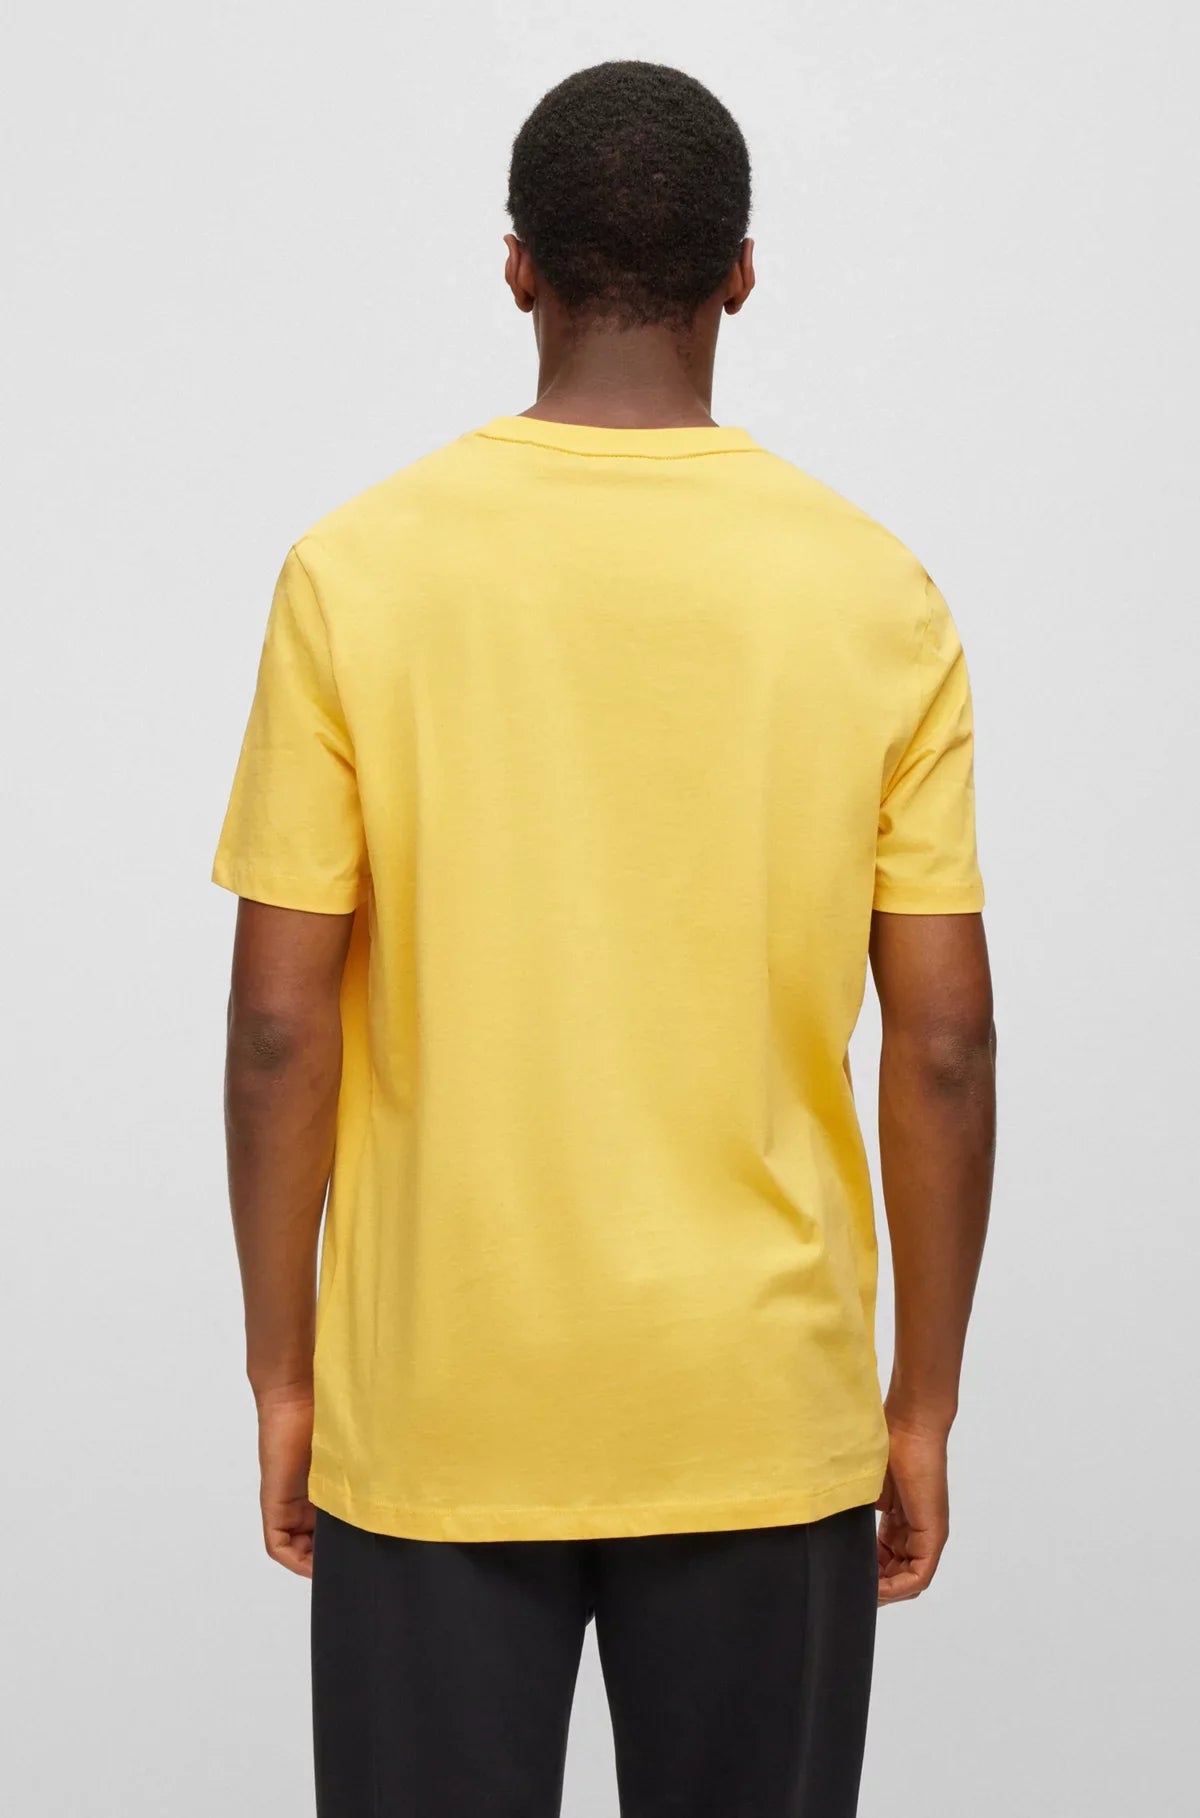 Camiseta Hugo Medium Yellow